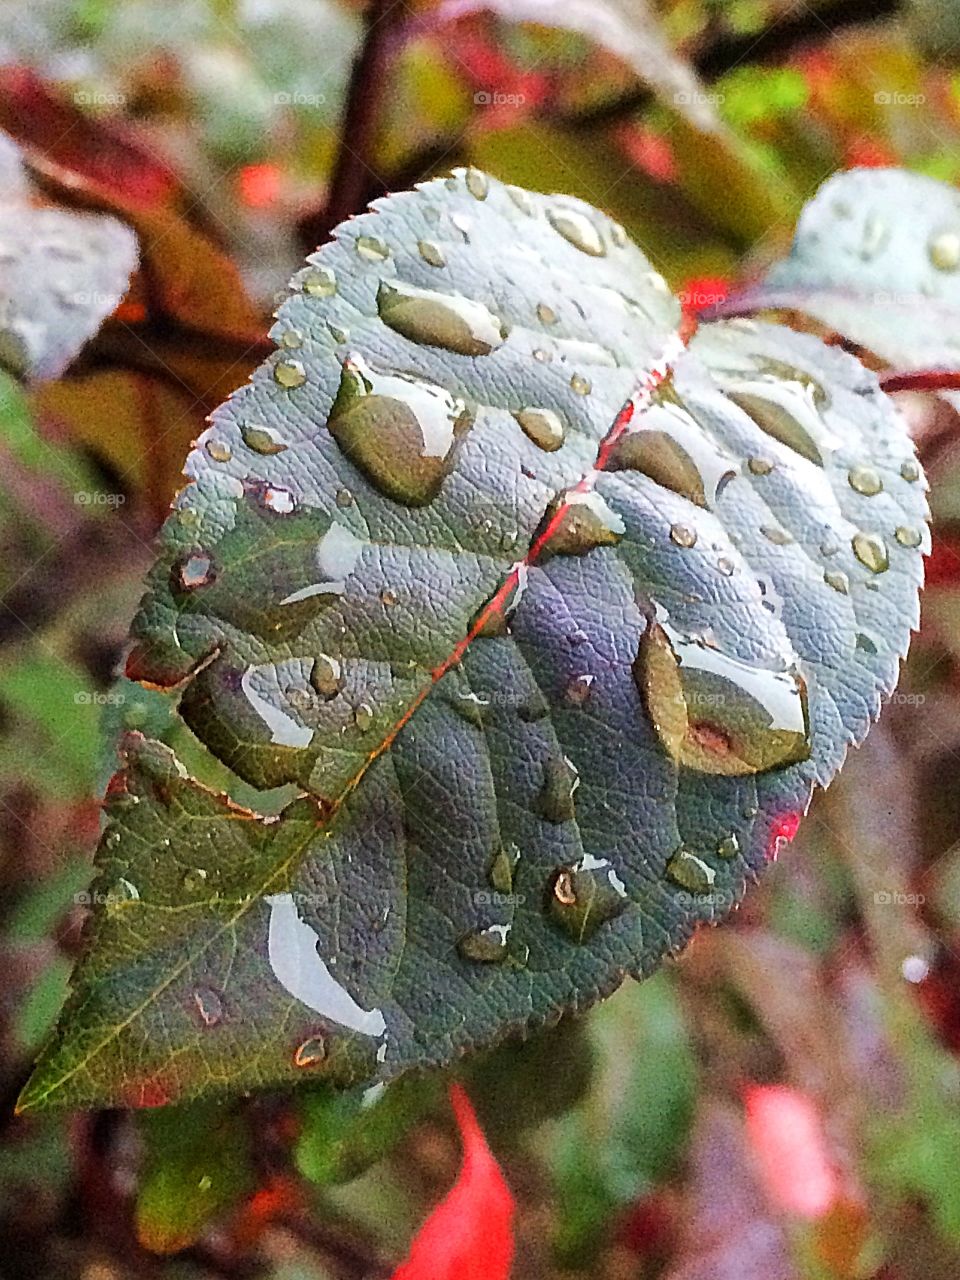 Wet leaf during rainy season